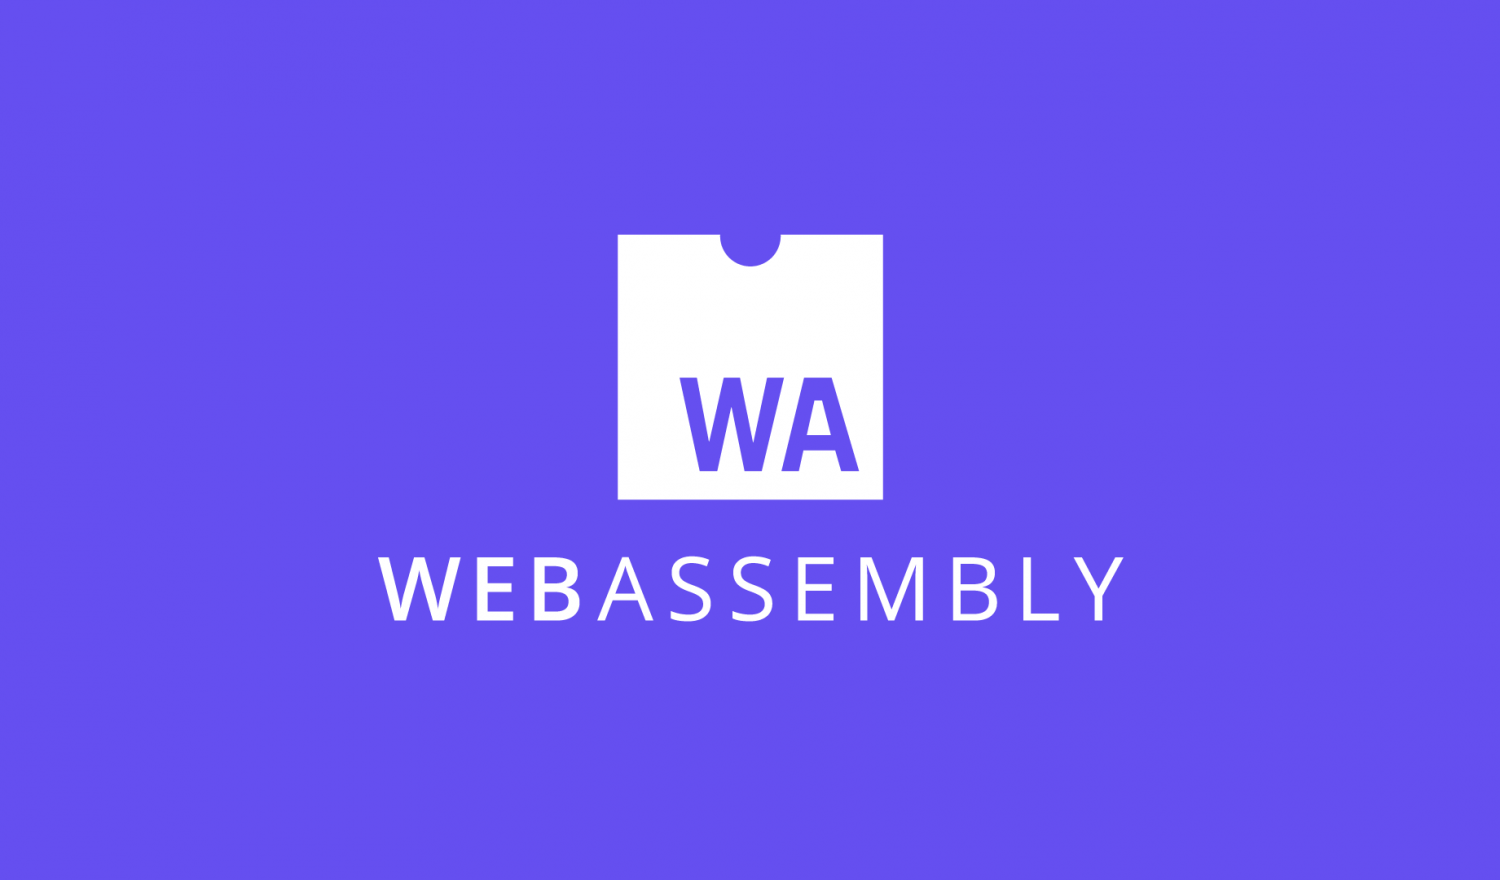 The Webassembly logo